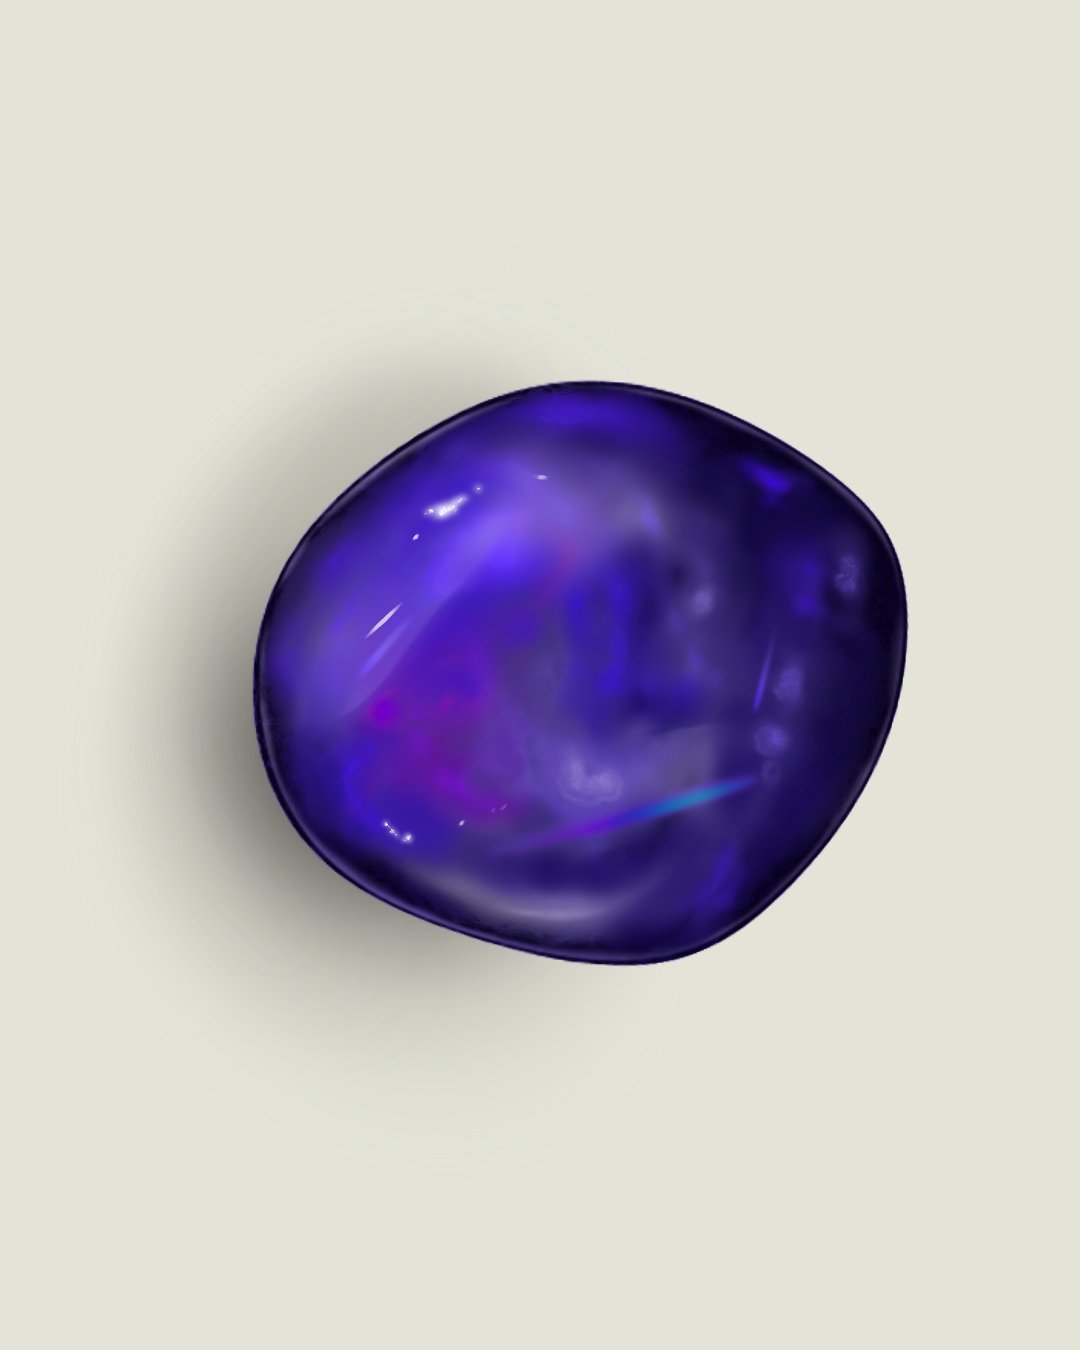 Sombre purple rock